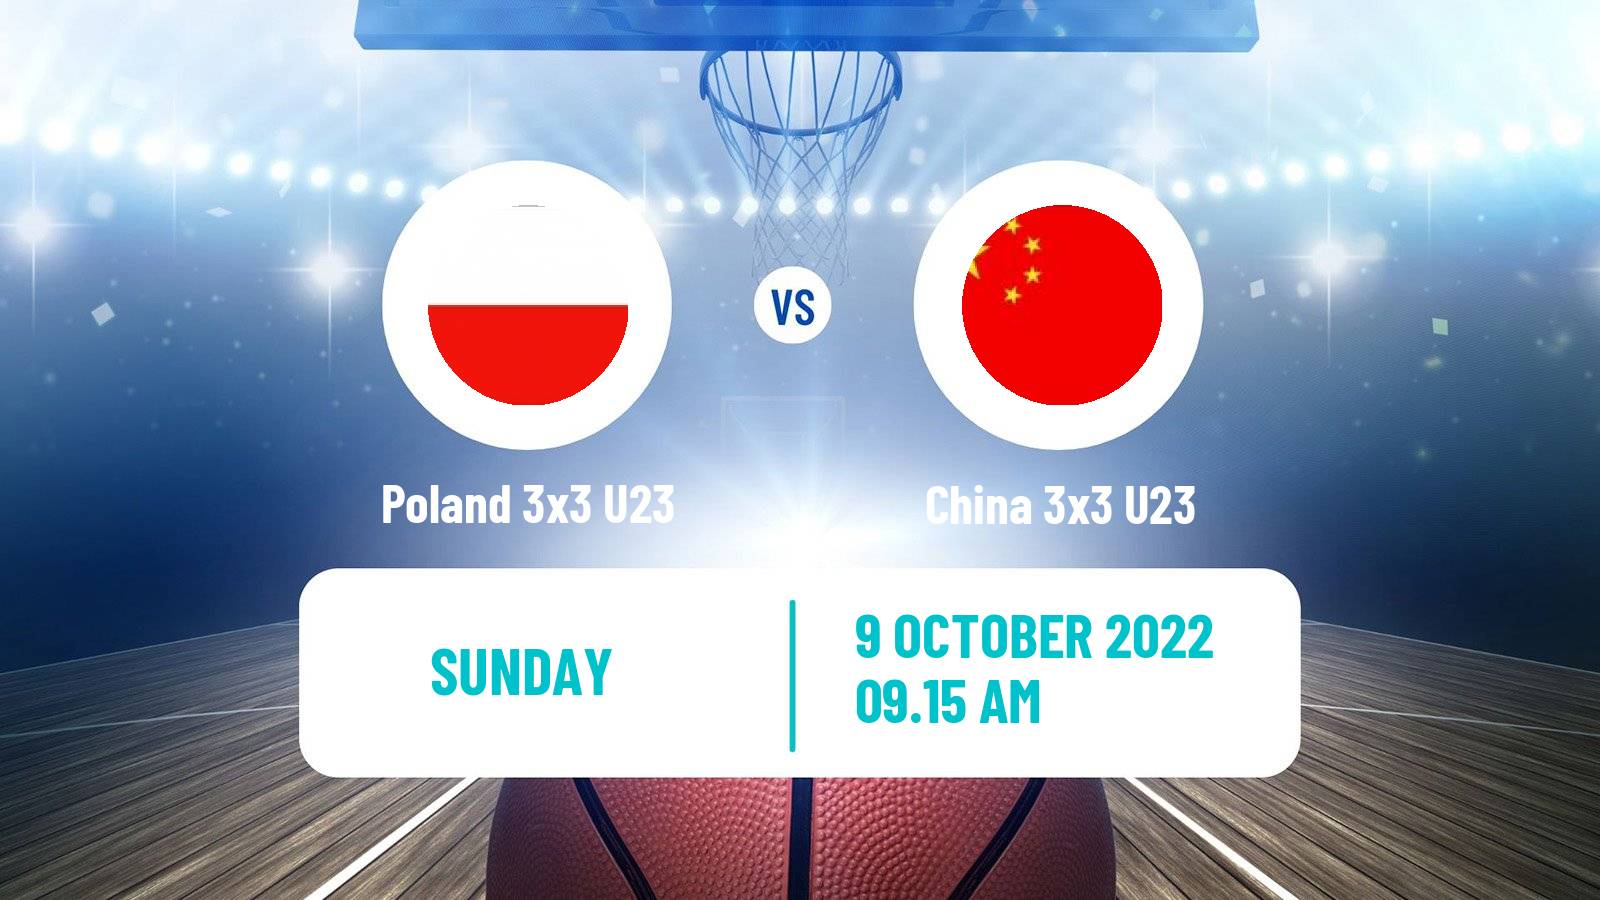 Basketball World Cup Basketball 3x3 U23 Poland 3x3 U23 - China 3x3 U23